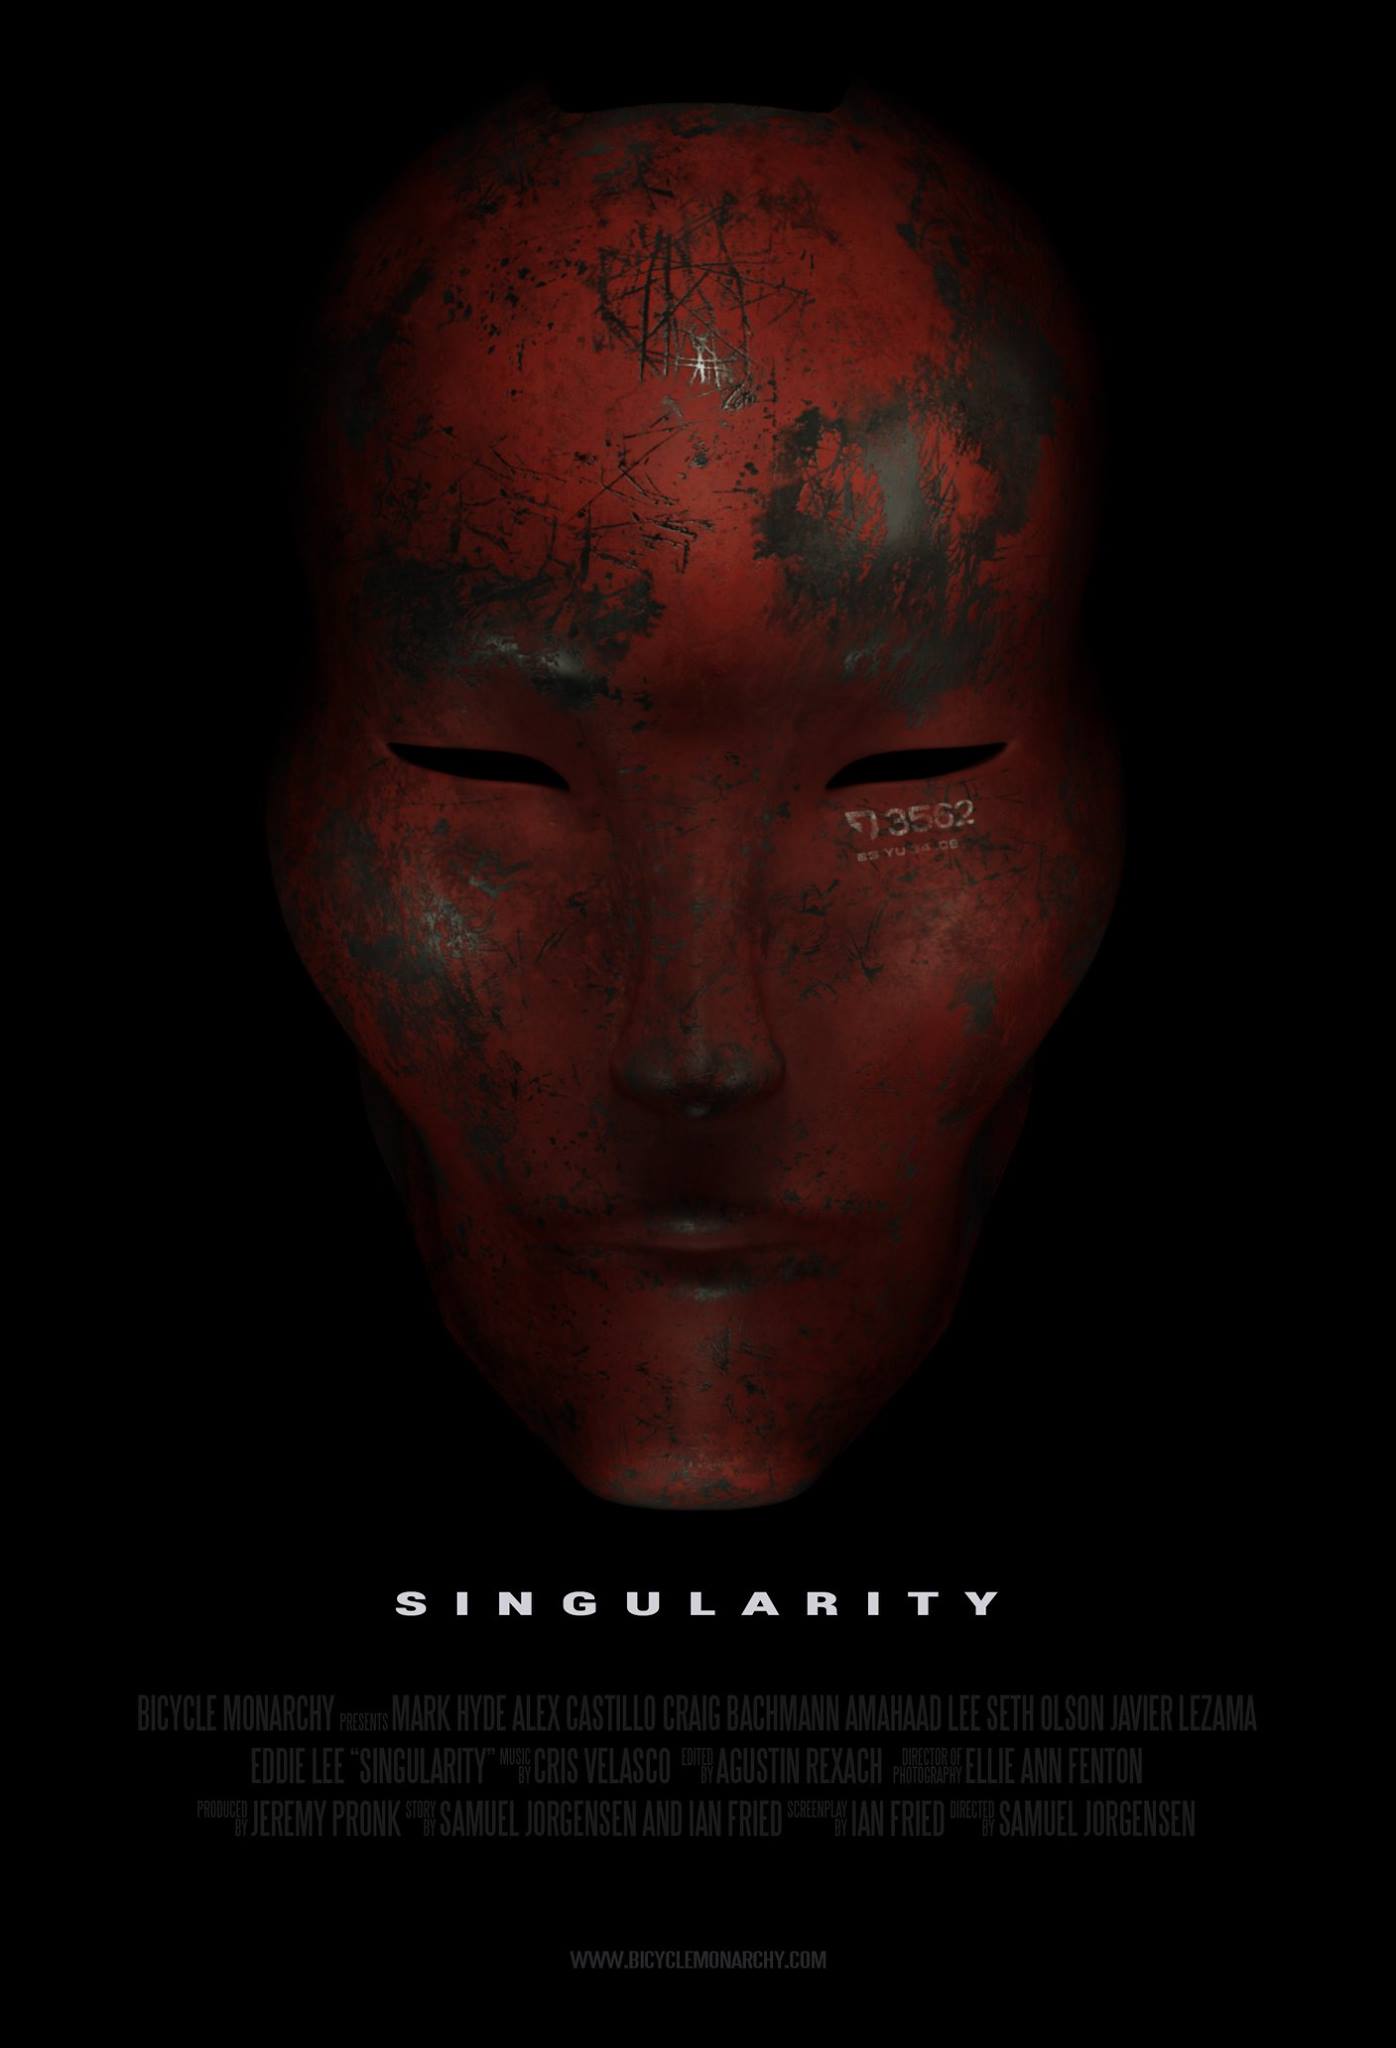 The Singularity by Mark Rodseth